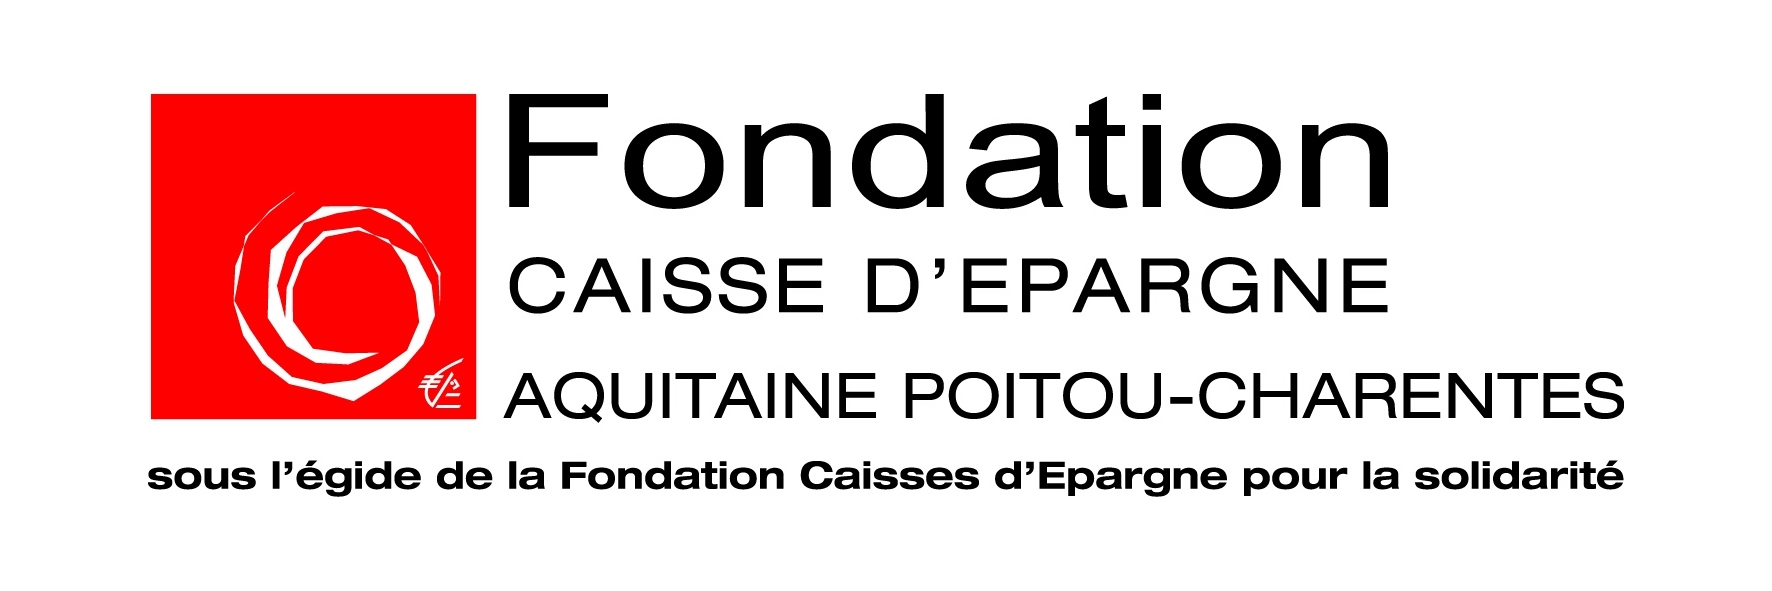 Fondation-Caisse-dEpargne-Aquitaine-Poitou-Charentes